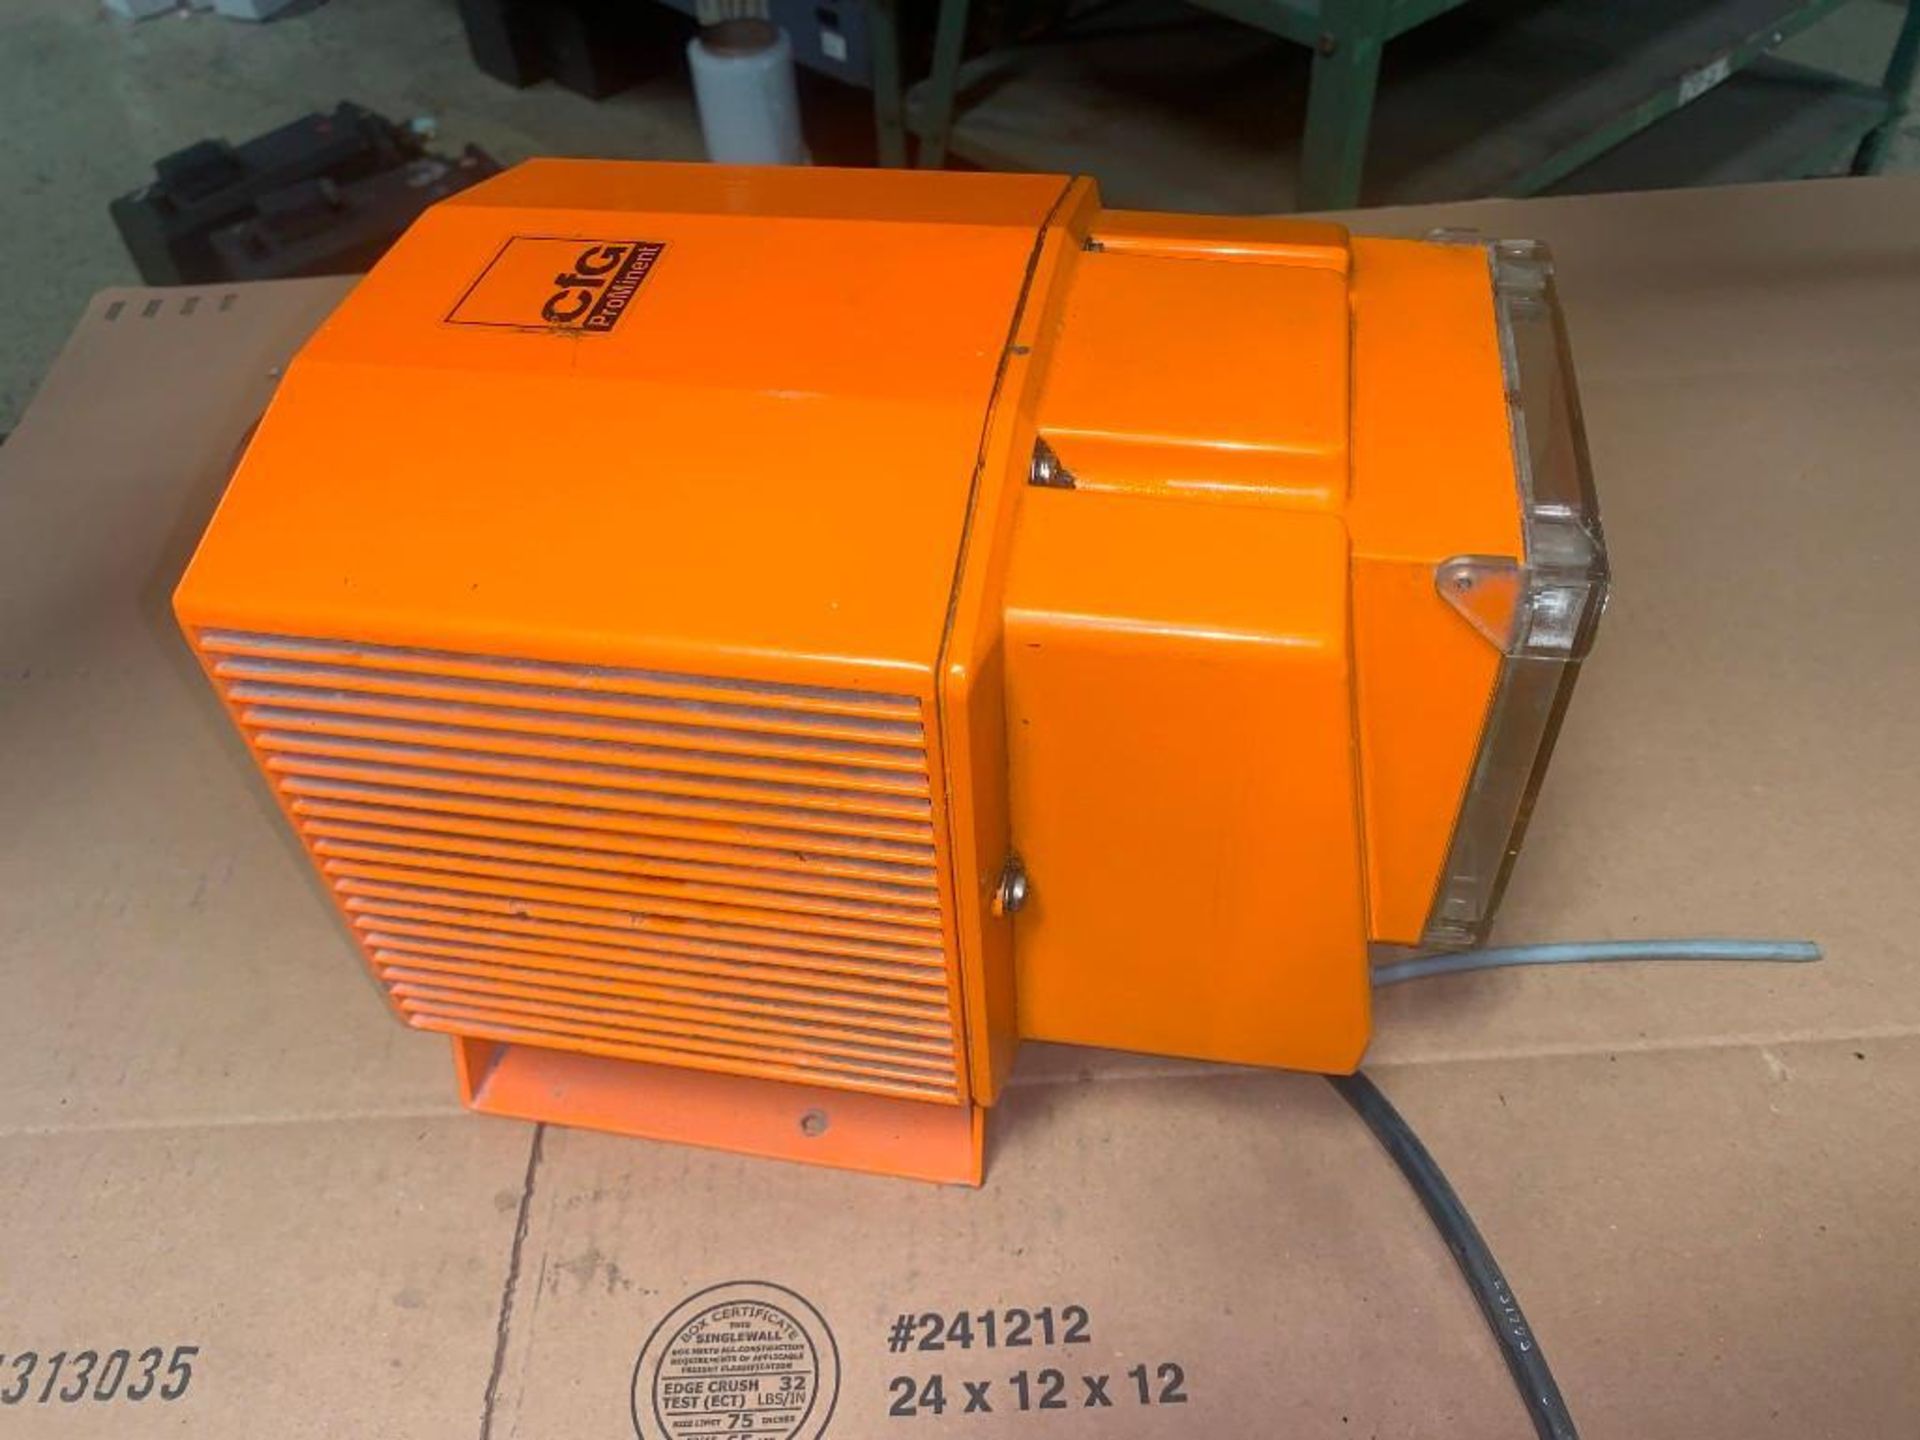 Dulcometer Prominent Metering Pump, Typ# C 0308 N, 115 V, 60 Hz, 23 W